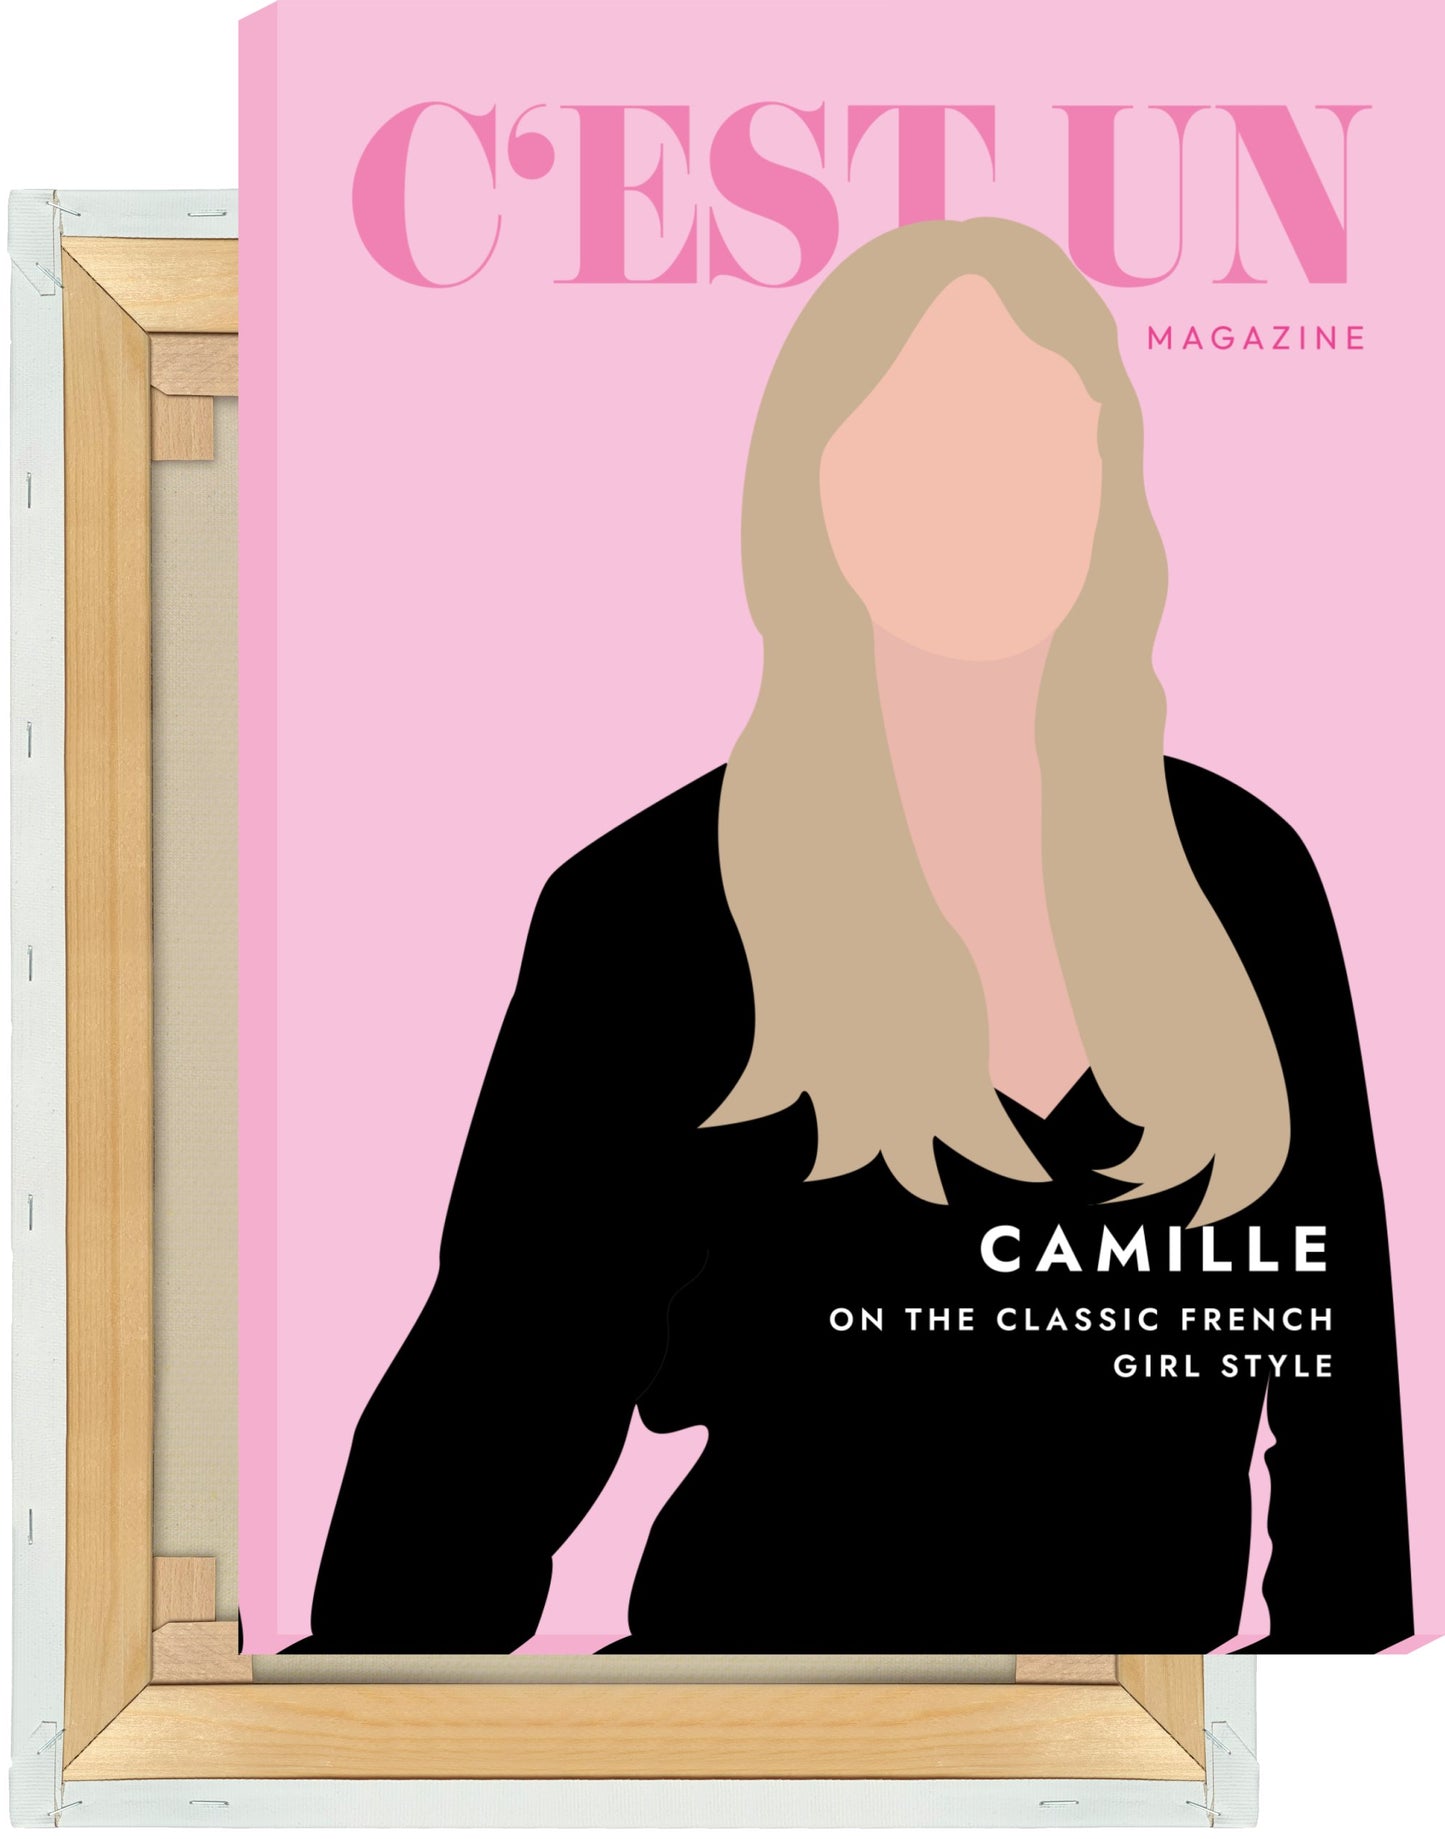 Leinwand Emily in Paris - Cest Un Magazine - Camille